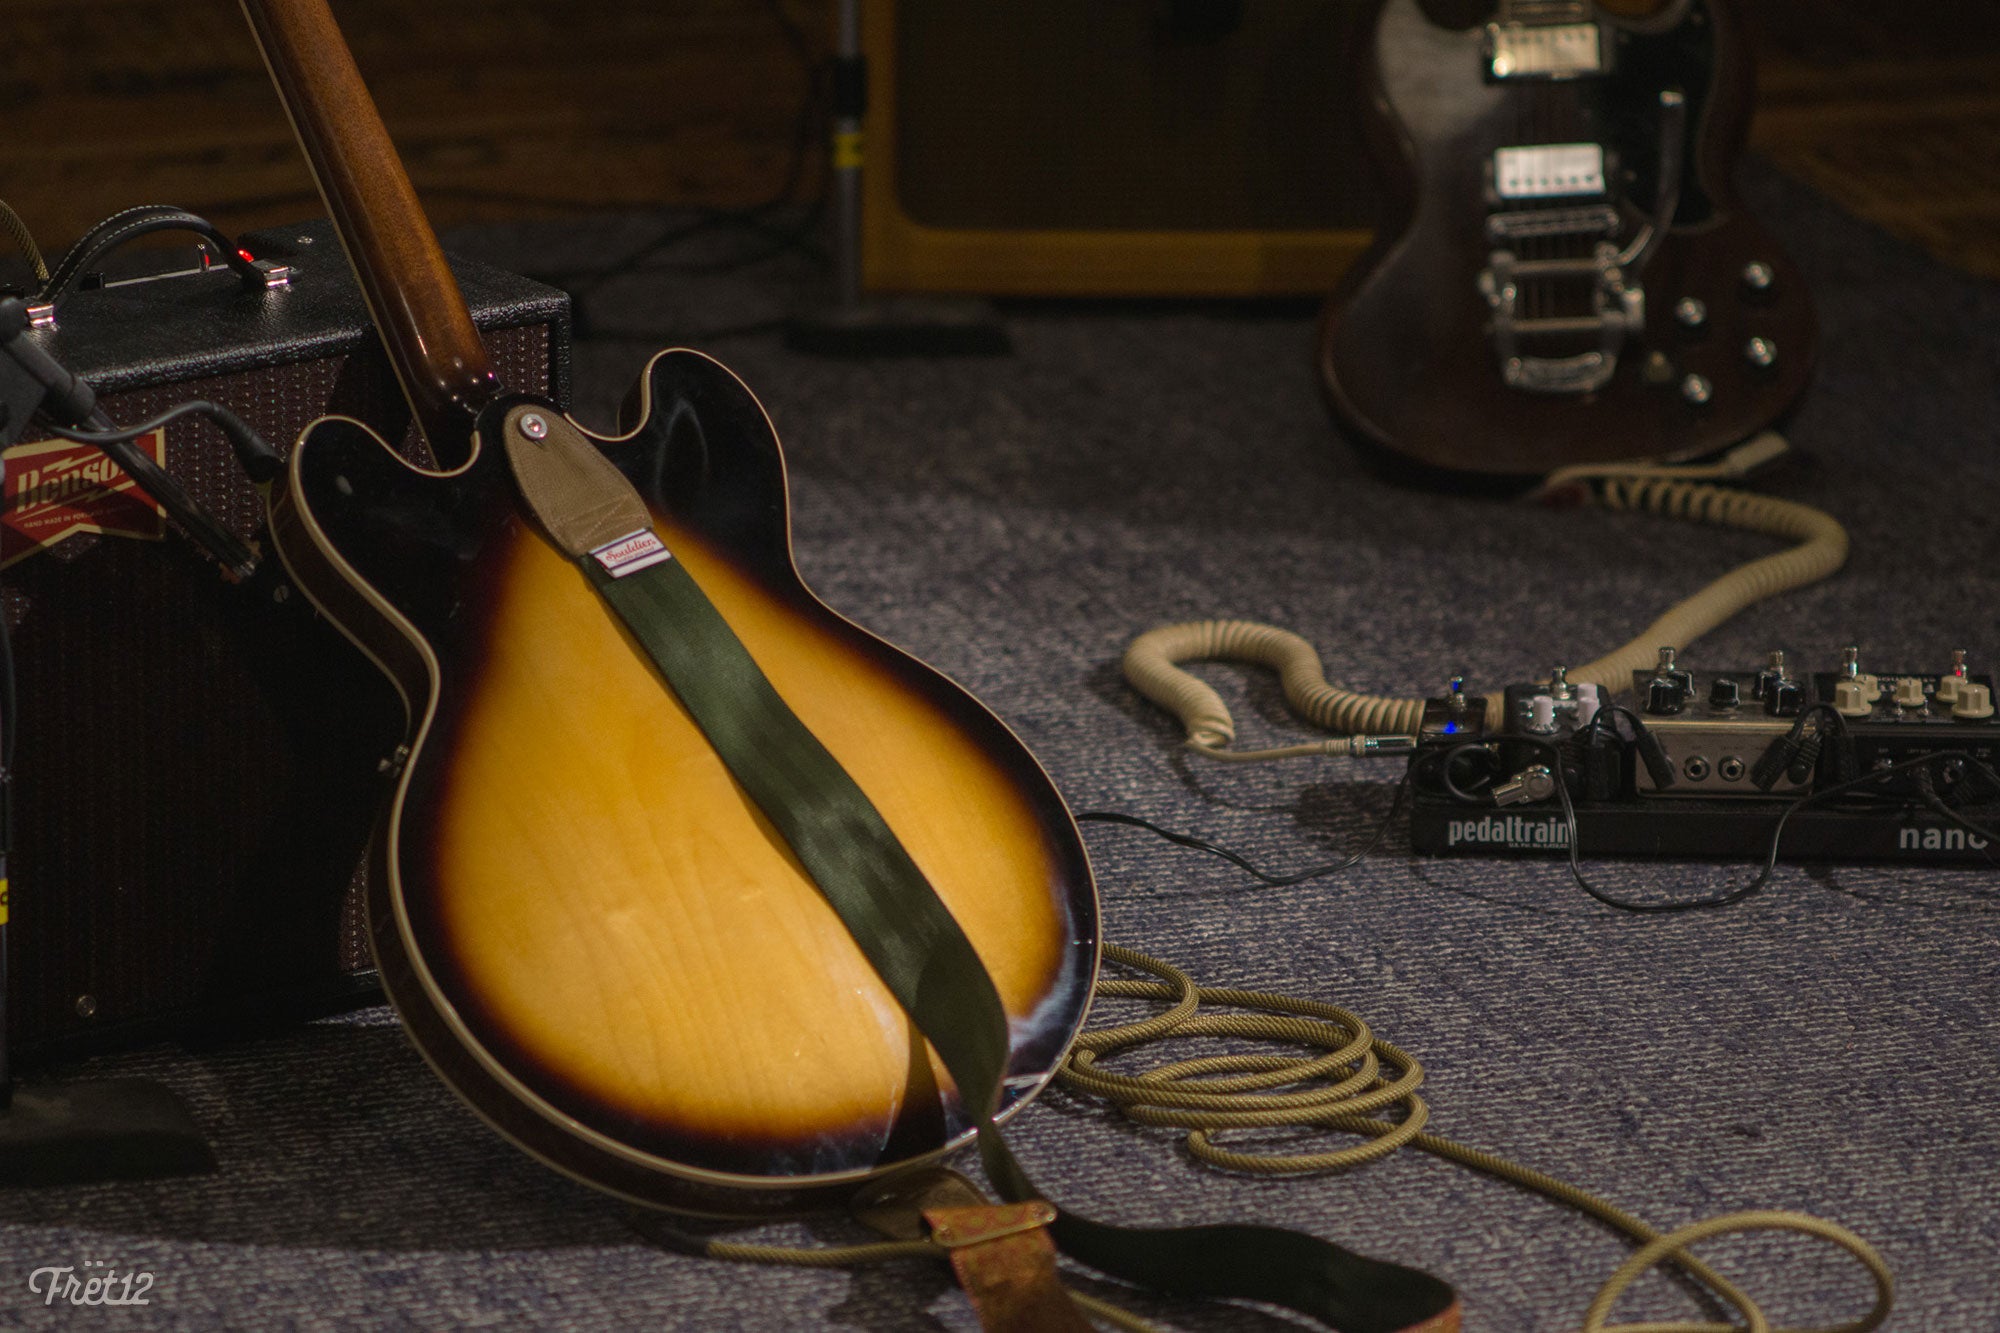 Nathan Graham's Benson amp and Gibson E-345 electric guitar